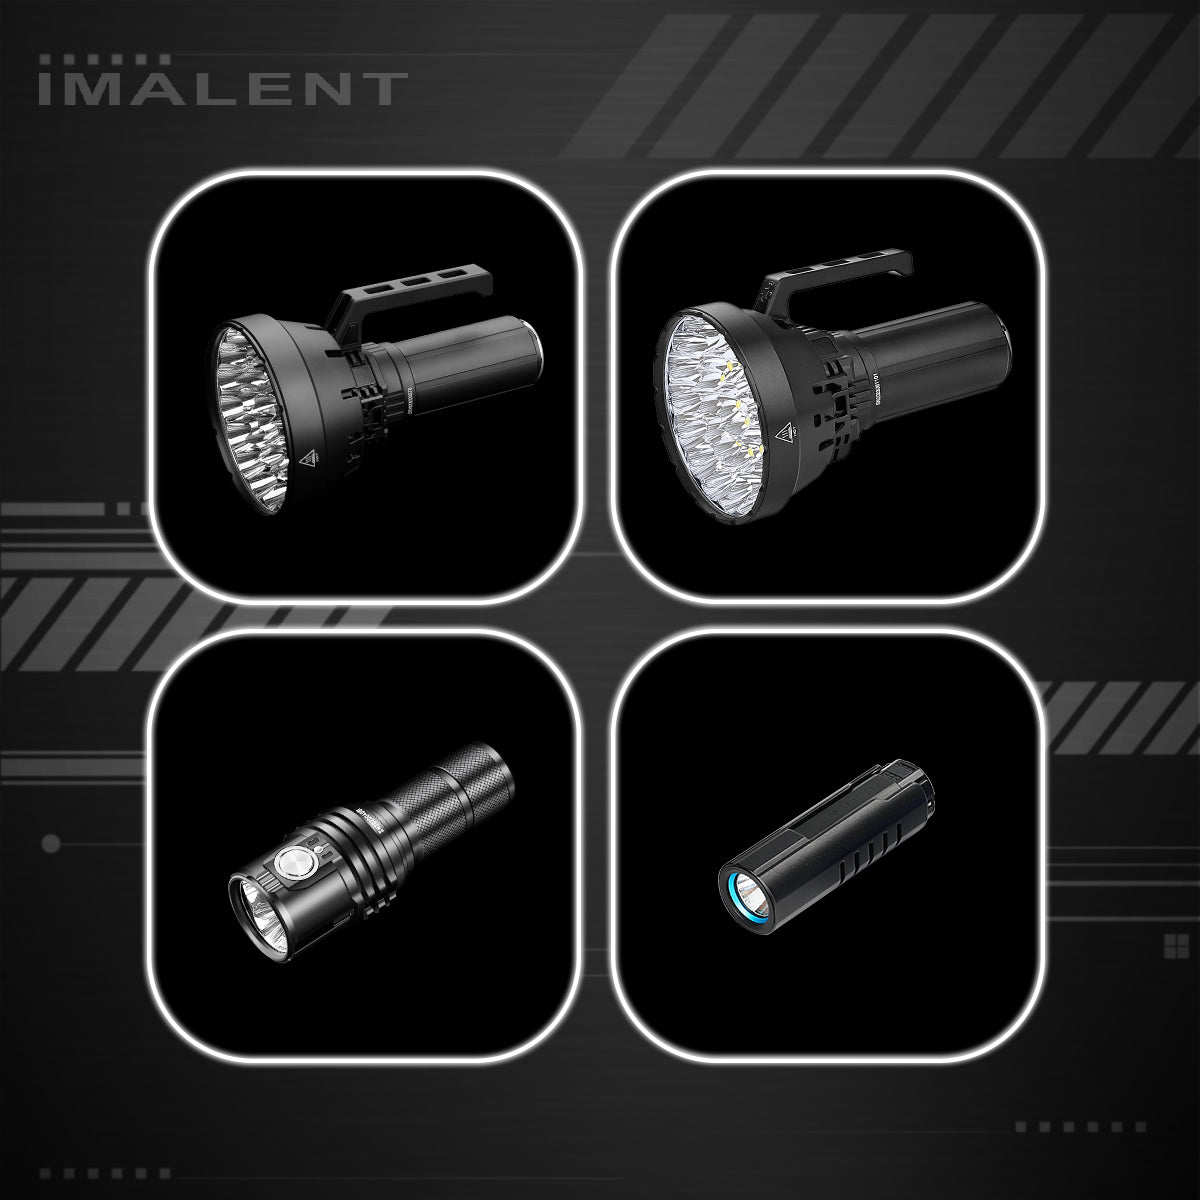 Imalent SR32 Flashlight Kit Review! (Brightest Flashlight In The